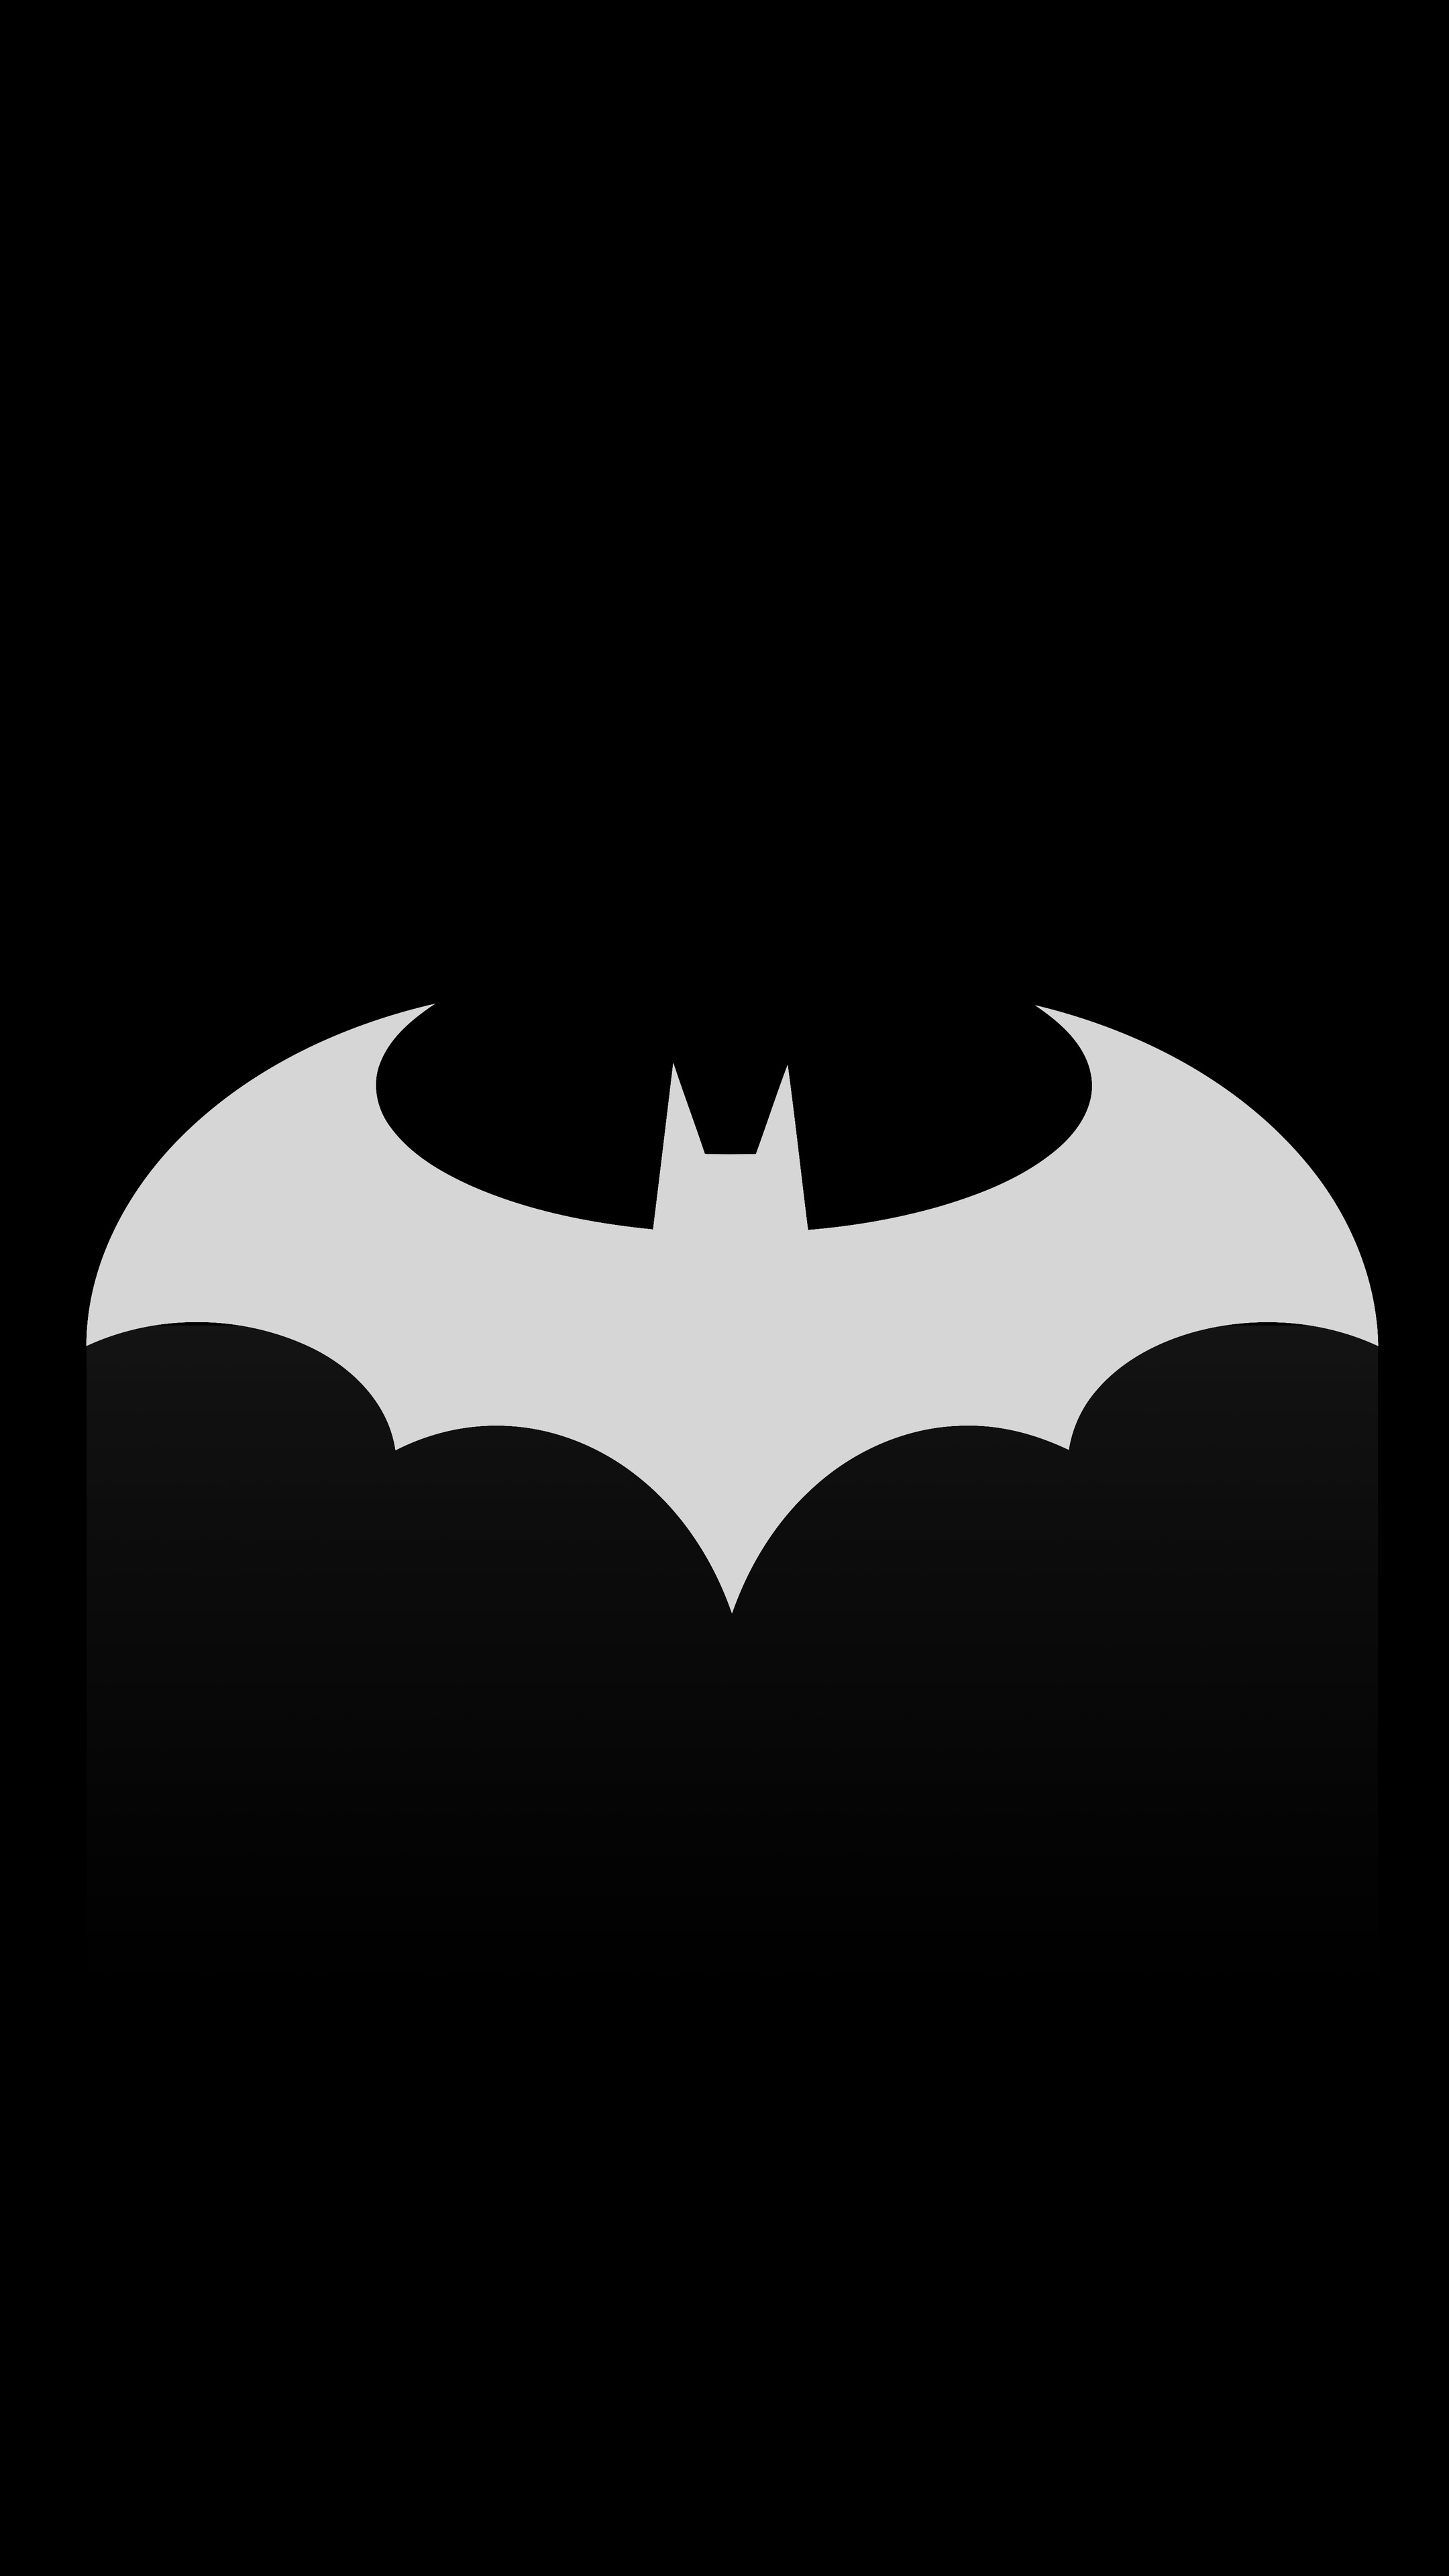 Batman Sign, High-resolution wallpaper, Xperia device, Premium image quality, 2160x3840 4K Phone